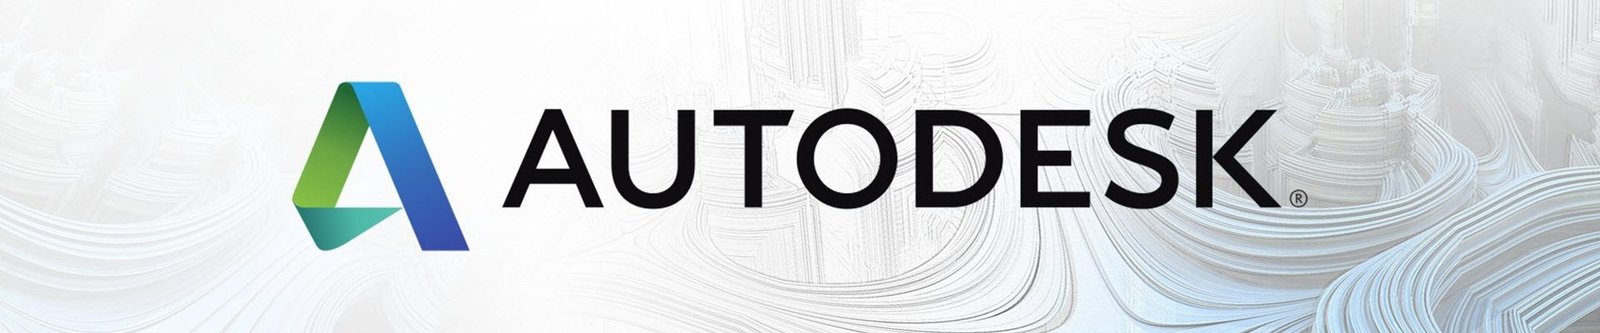 autodesk-banner